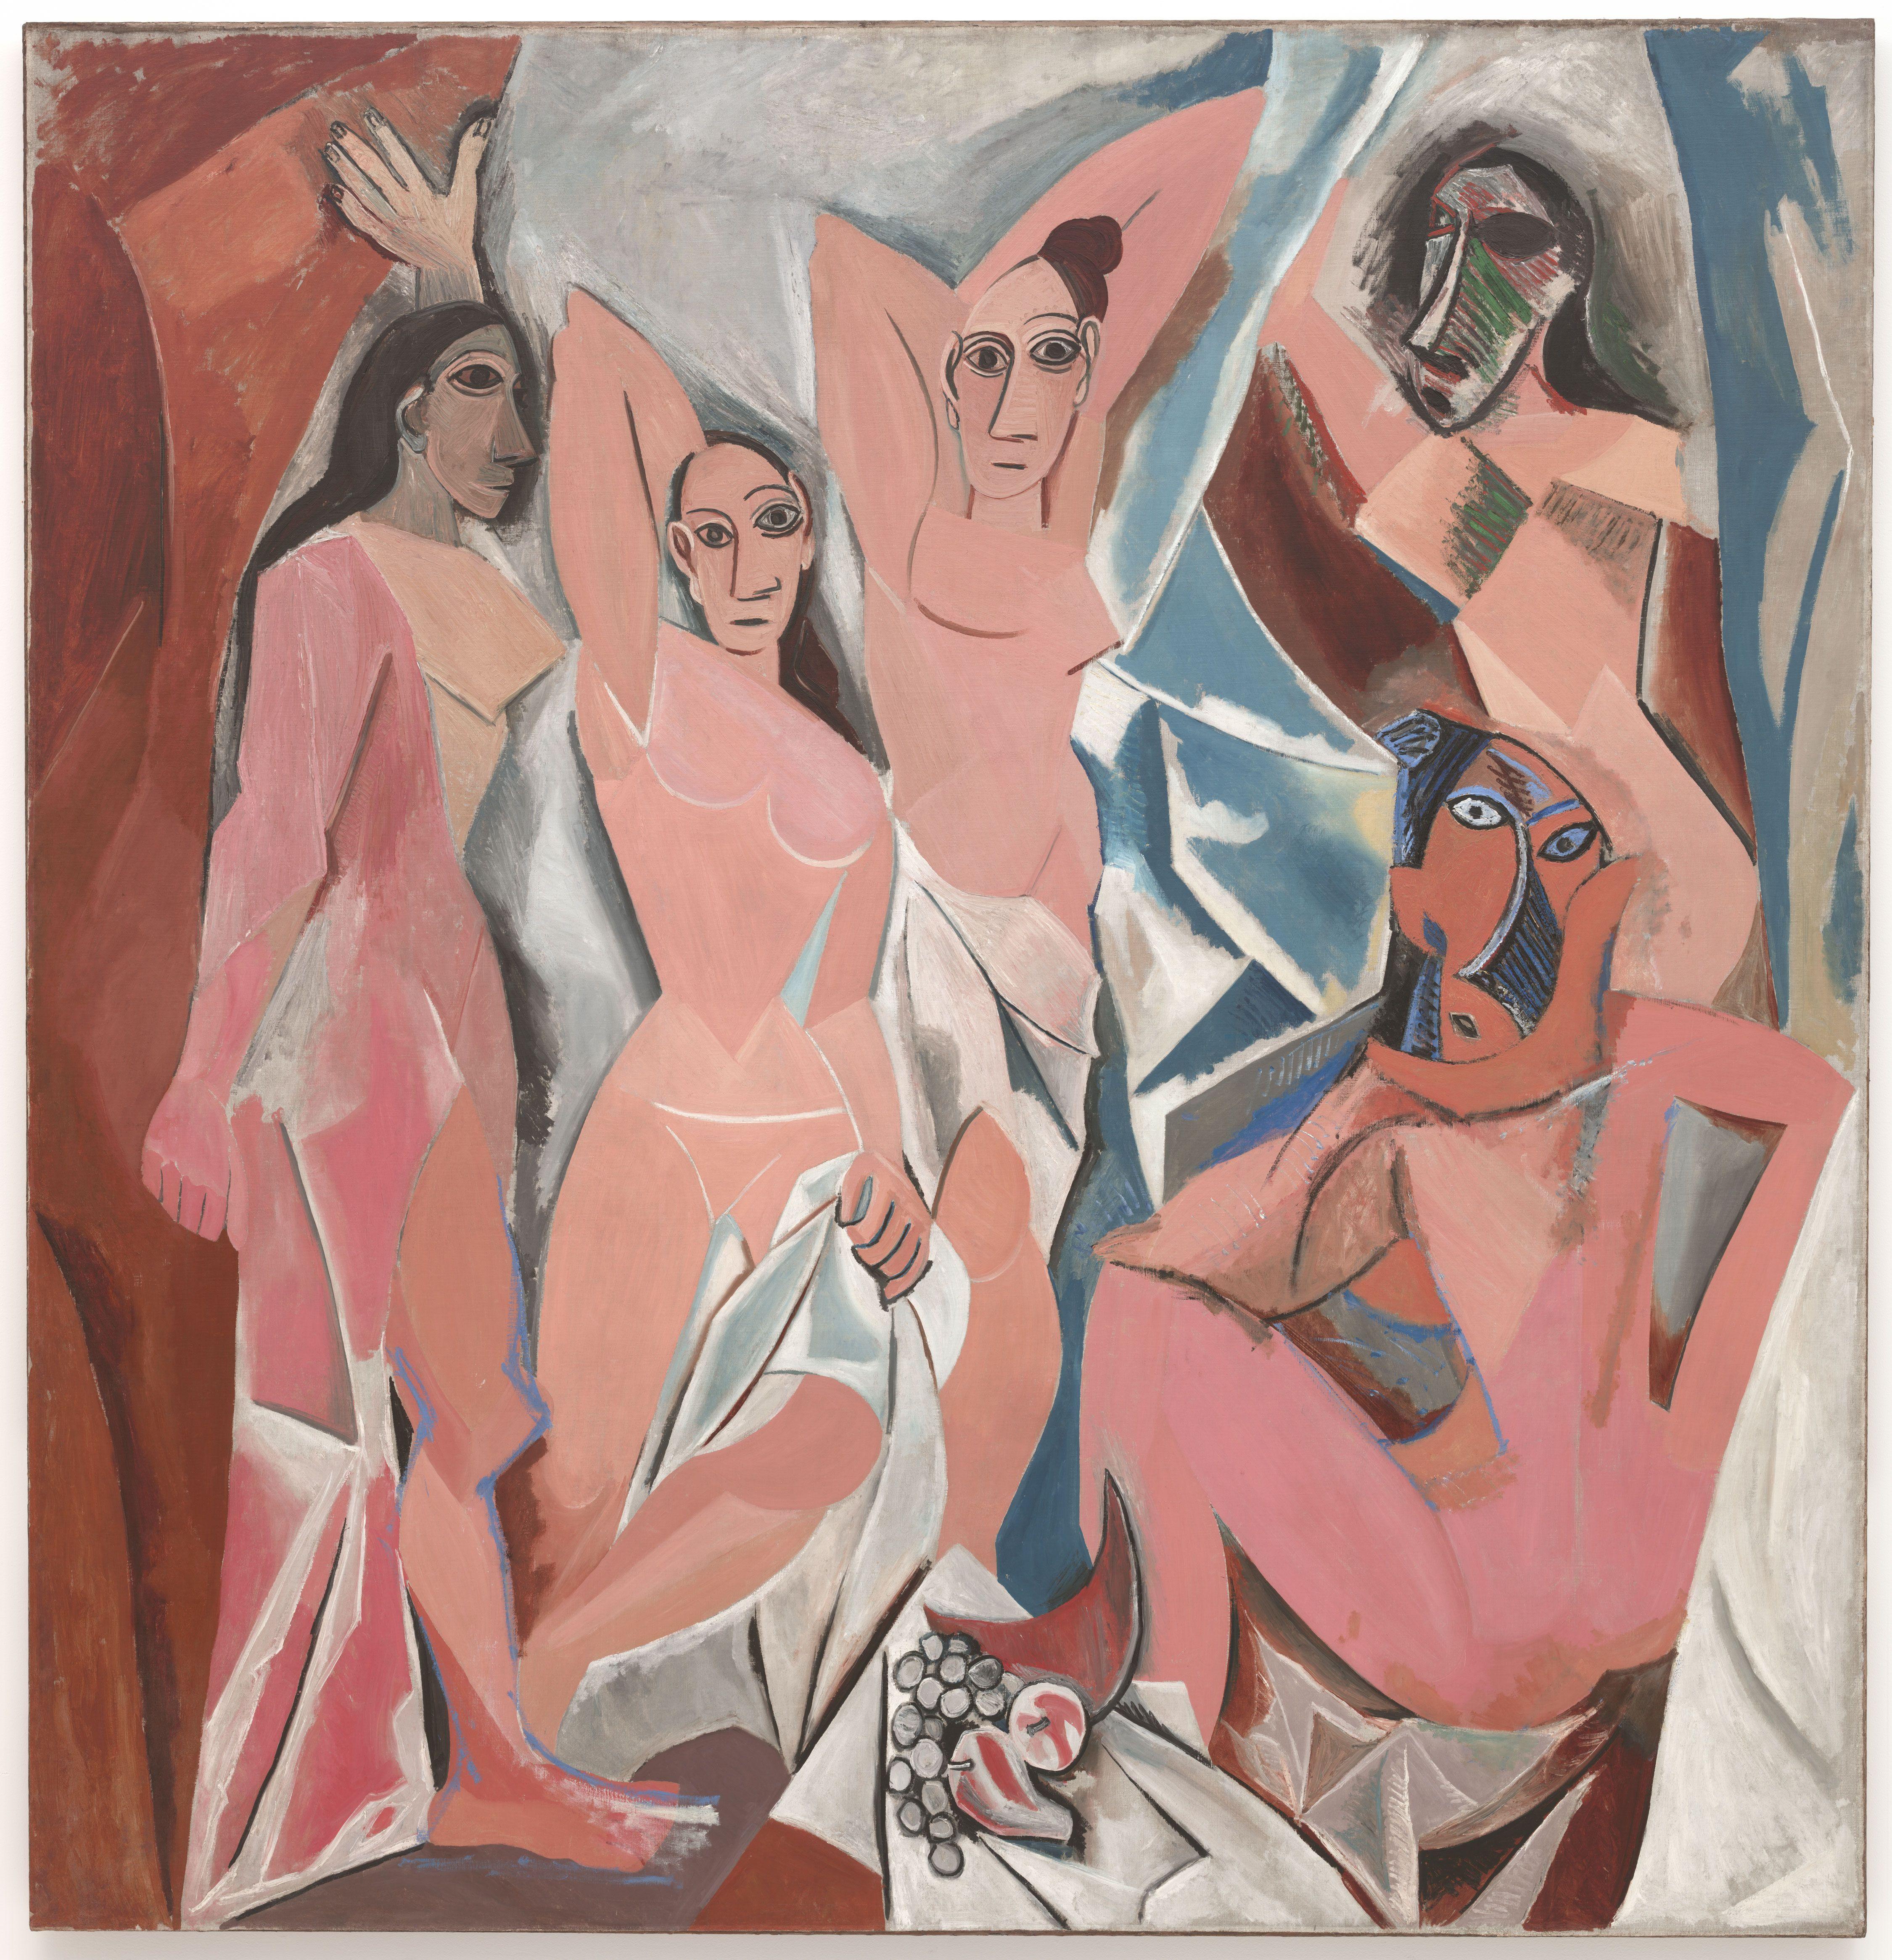 Pablo Picasso, Les Demoiselles d’Avignon, 1907, Museum of Modern Art, New York, NY, USA